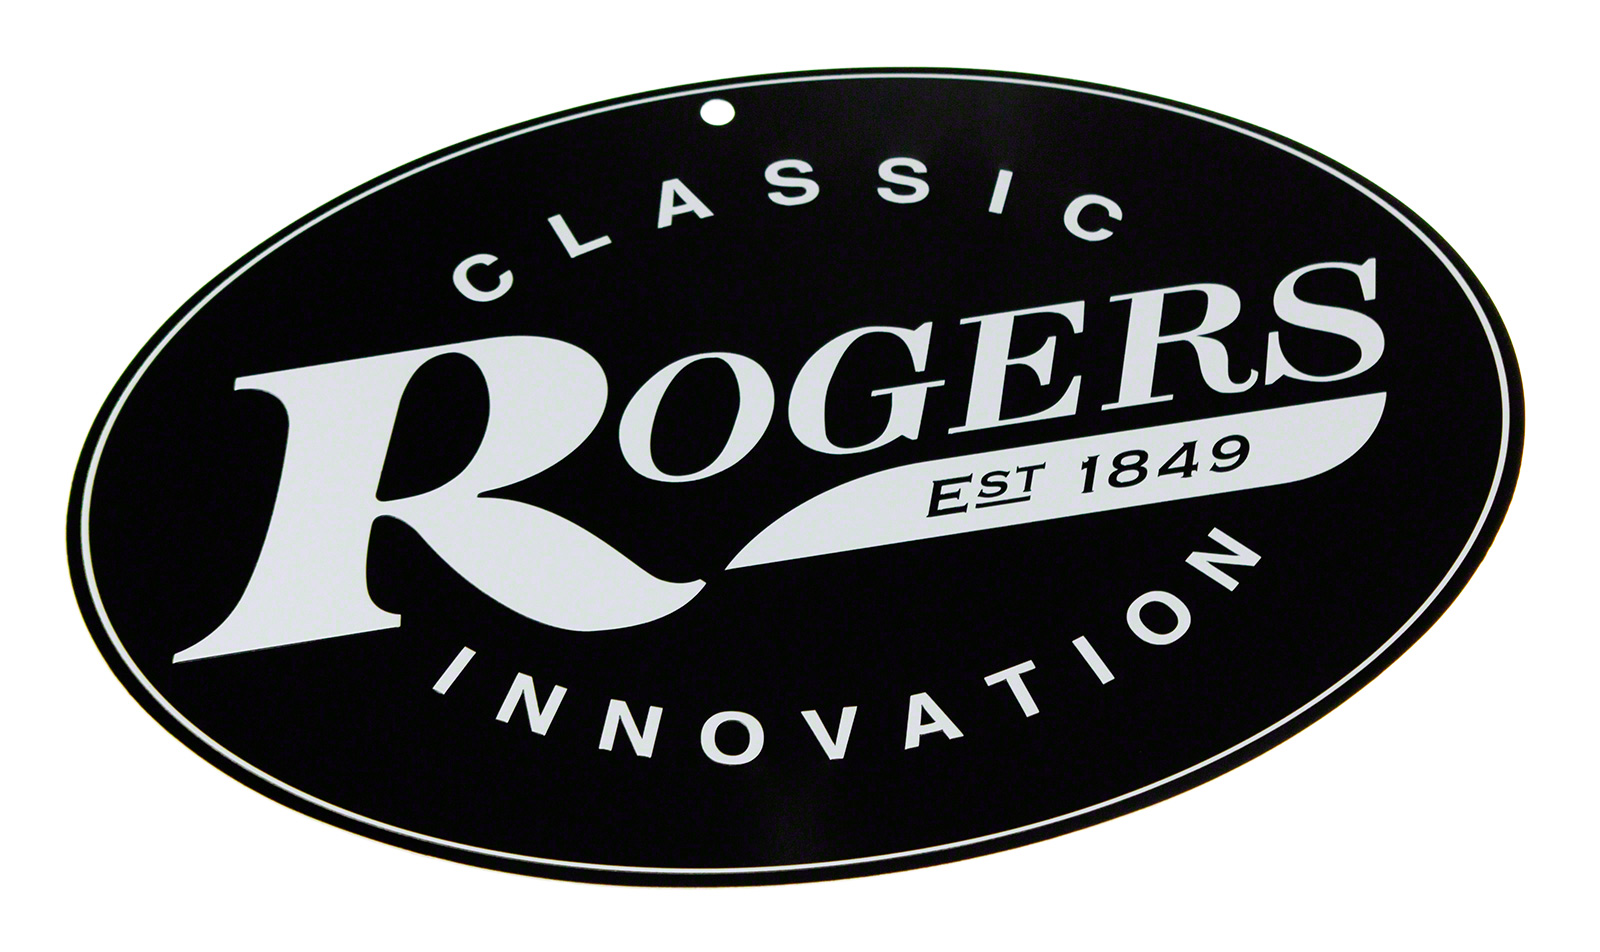 ROGERS DRUMS RA-RMLS LOGO METAL SIGN 30X20CM